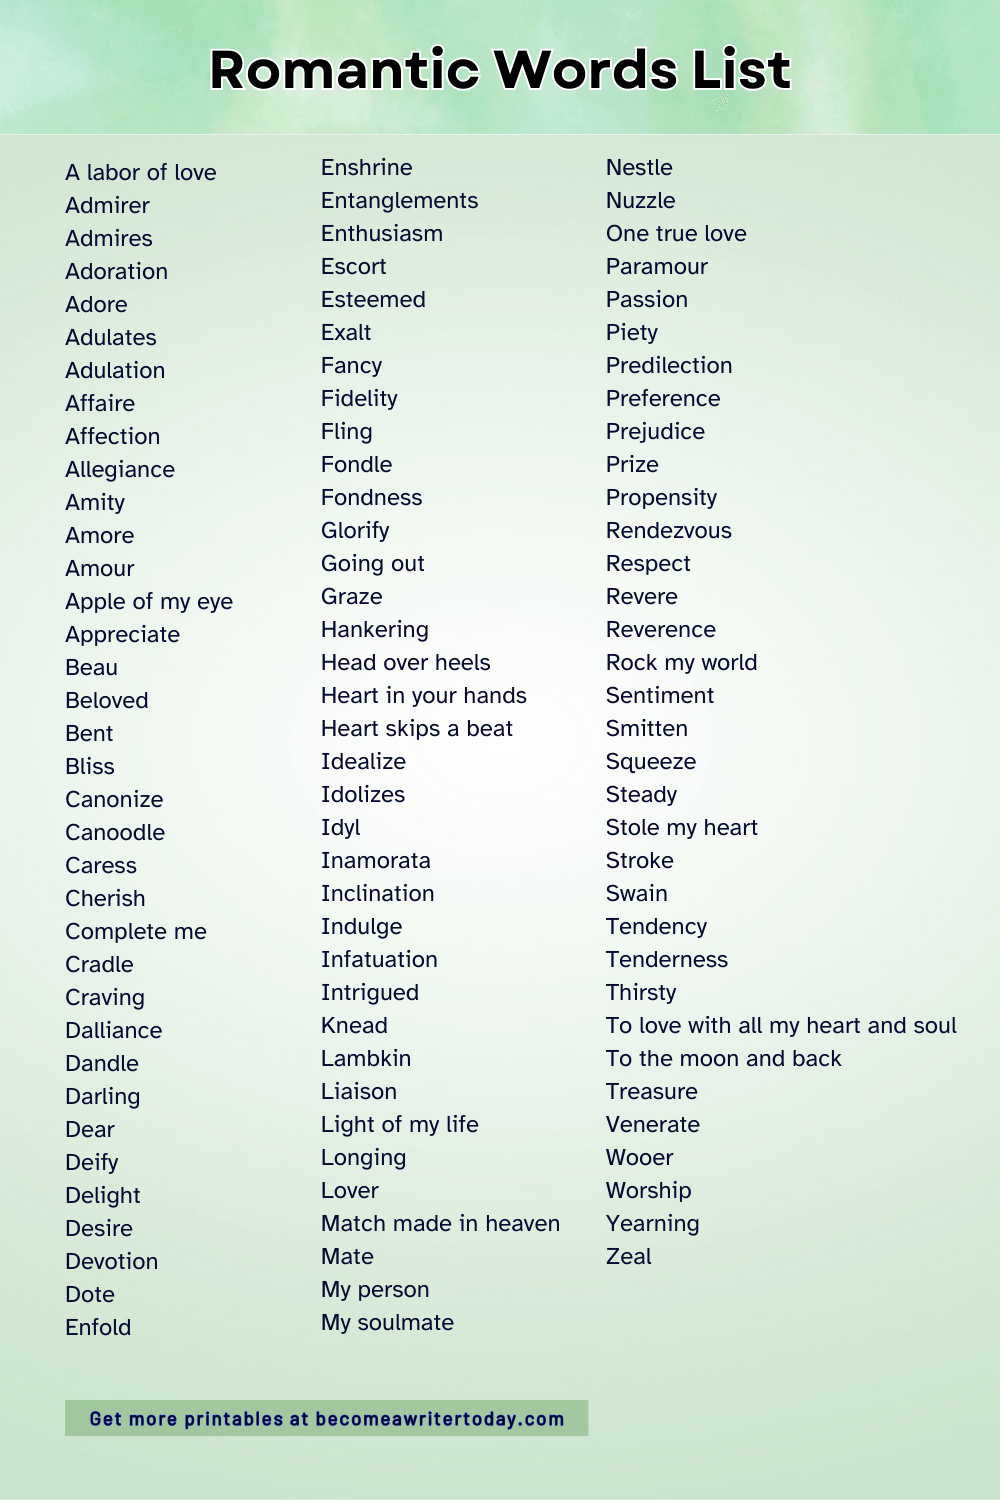 Romantic words list